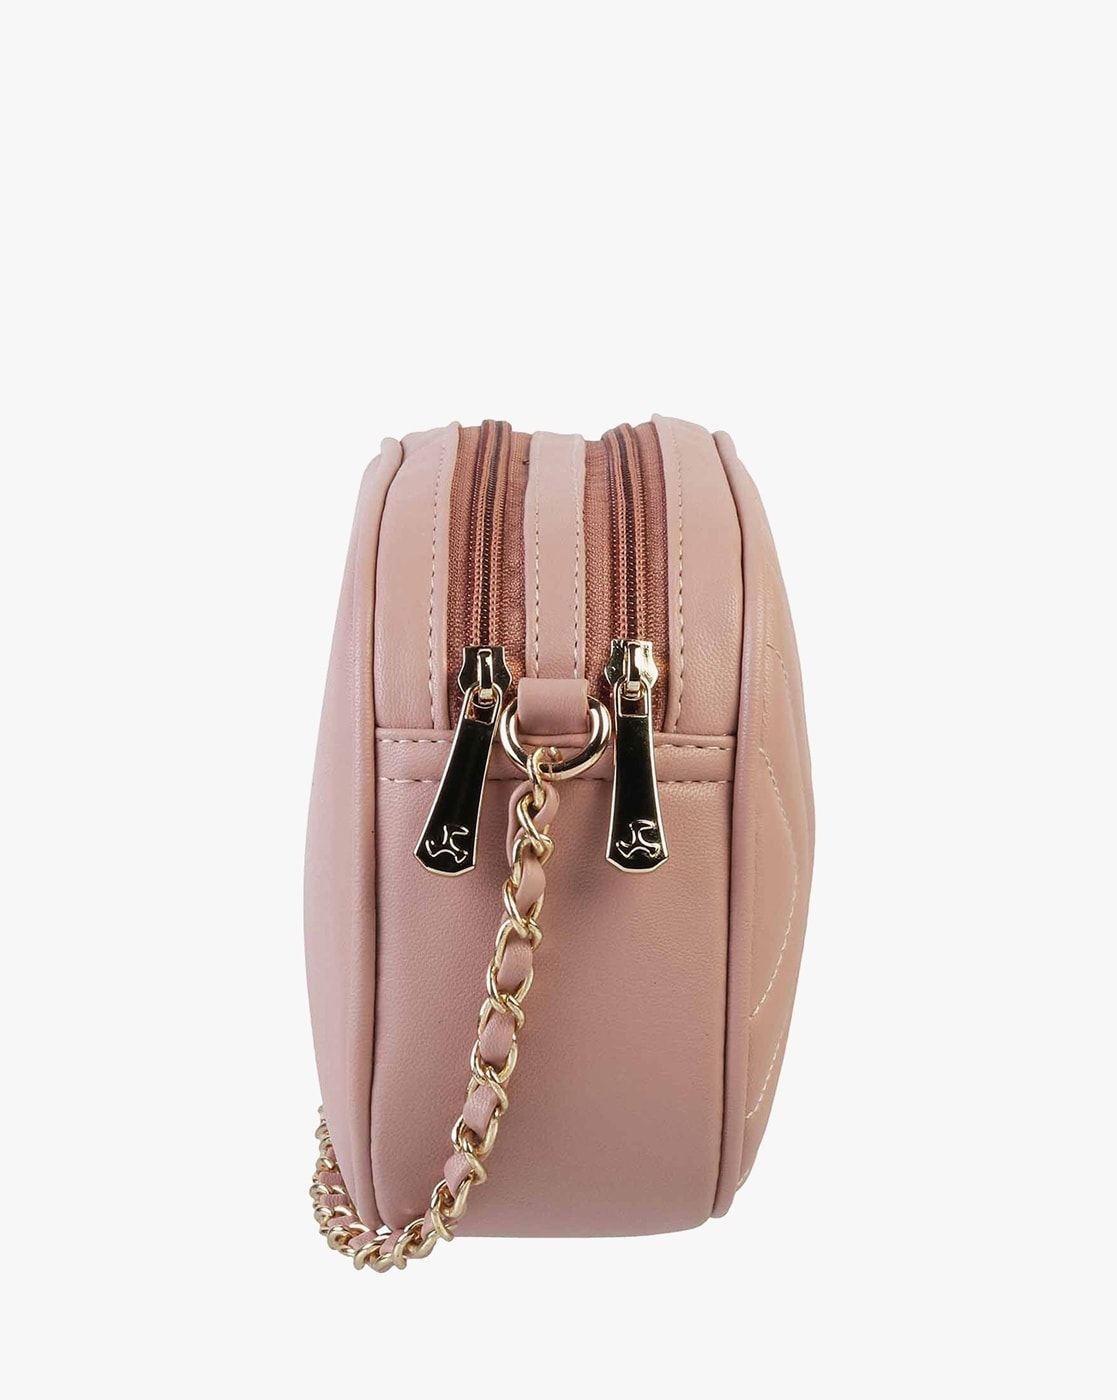 Kate Spade New York Knott Pebbled Leather Flap Crossbody Mochi Pink |  Crossbody Bag | fashionette